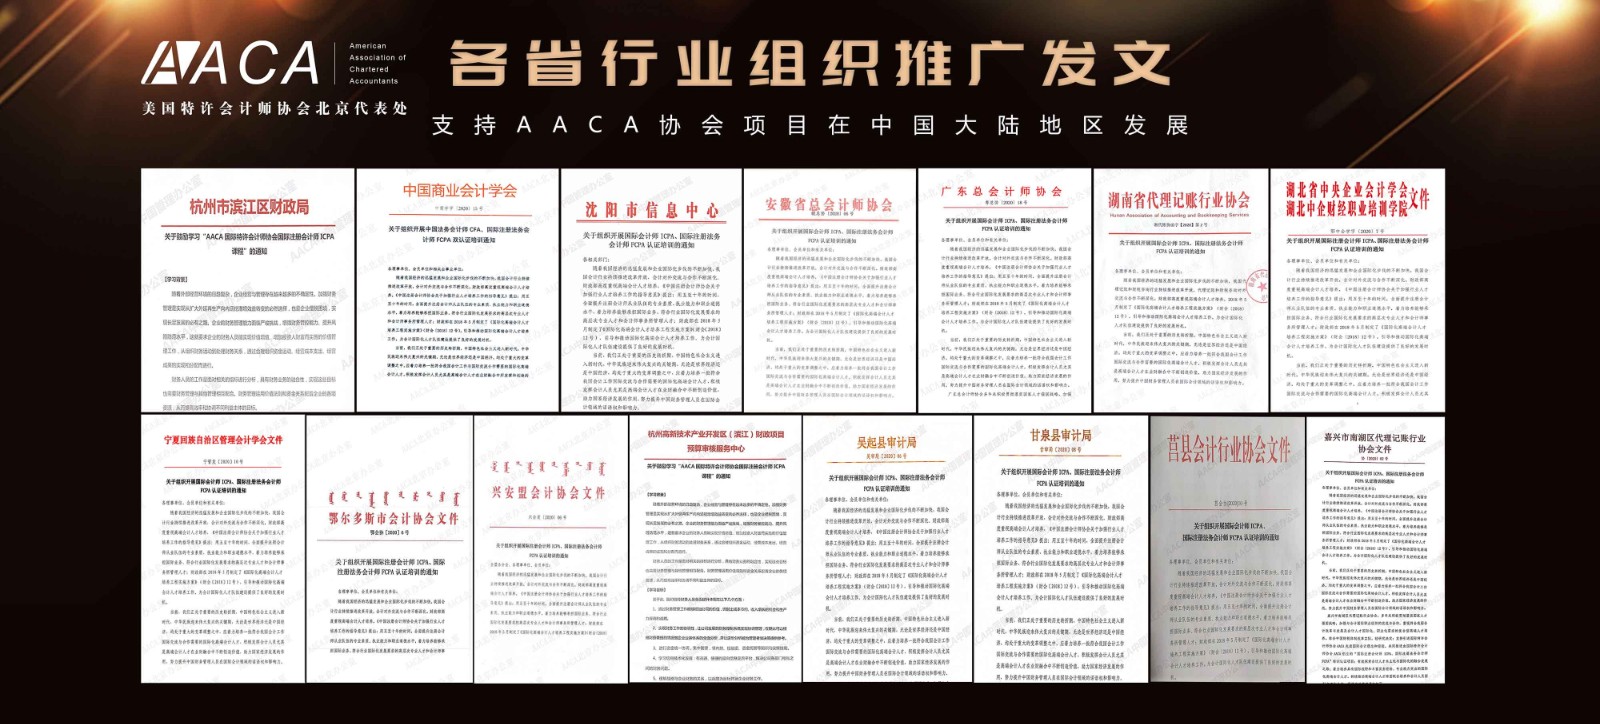 ICPA国际注册会计师与中国商业会计学会举办联合认证签约仪式